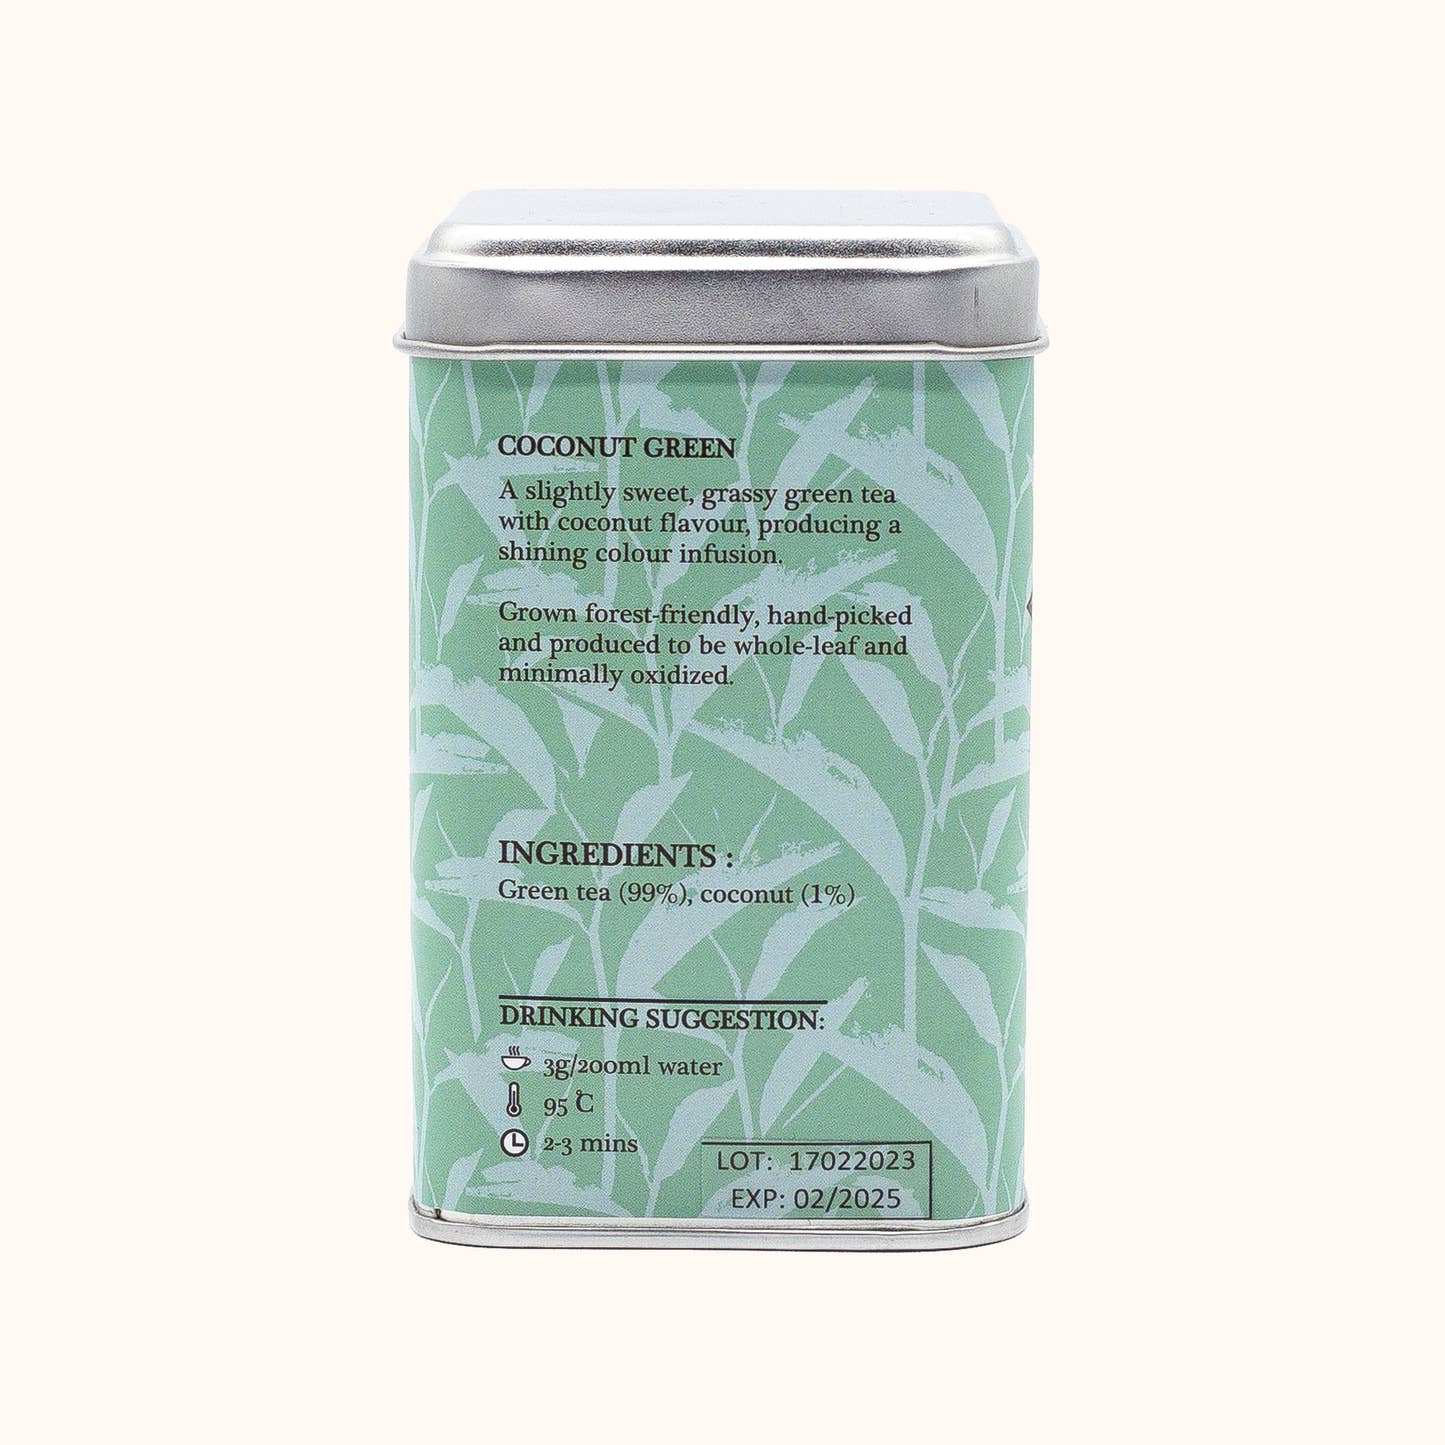 Coconut Green loose leaf tea by Monteaco green tea tin